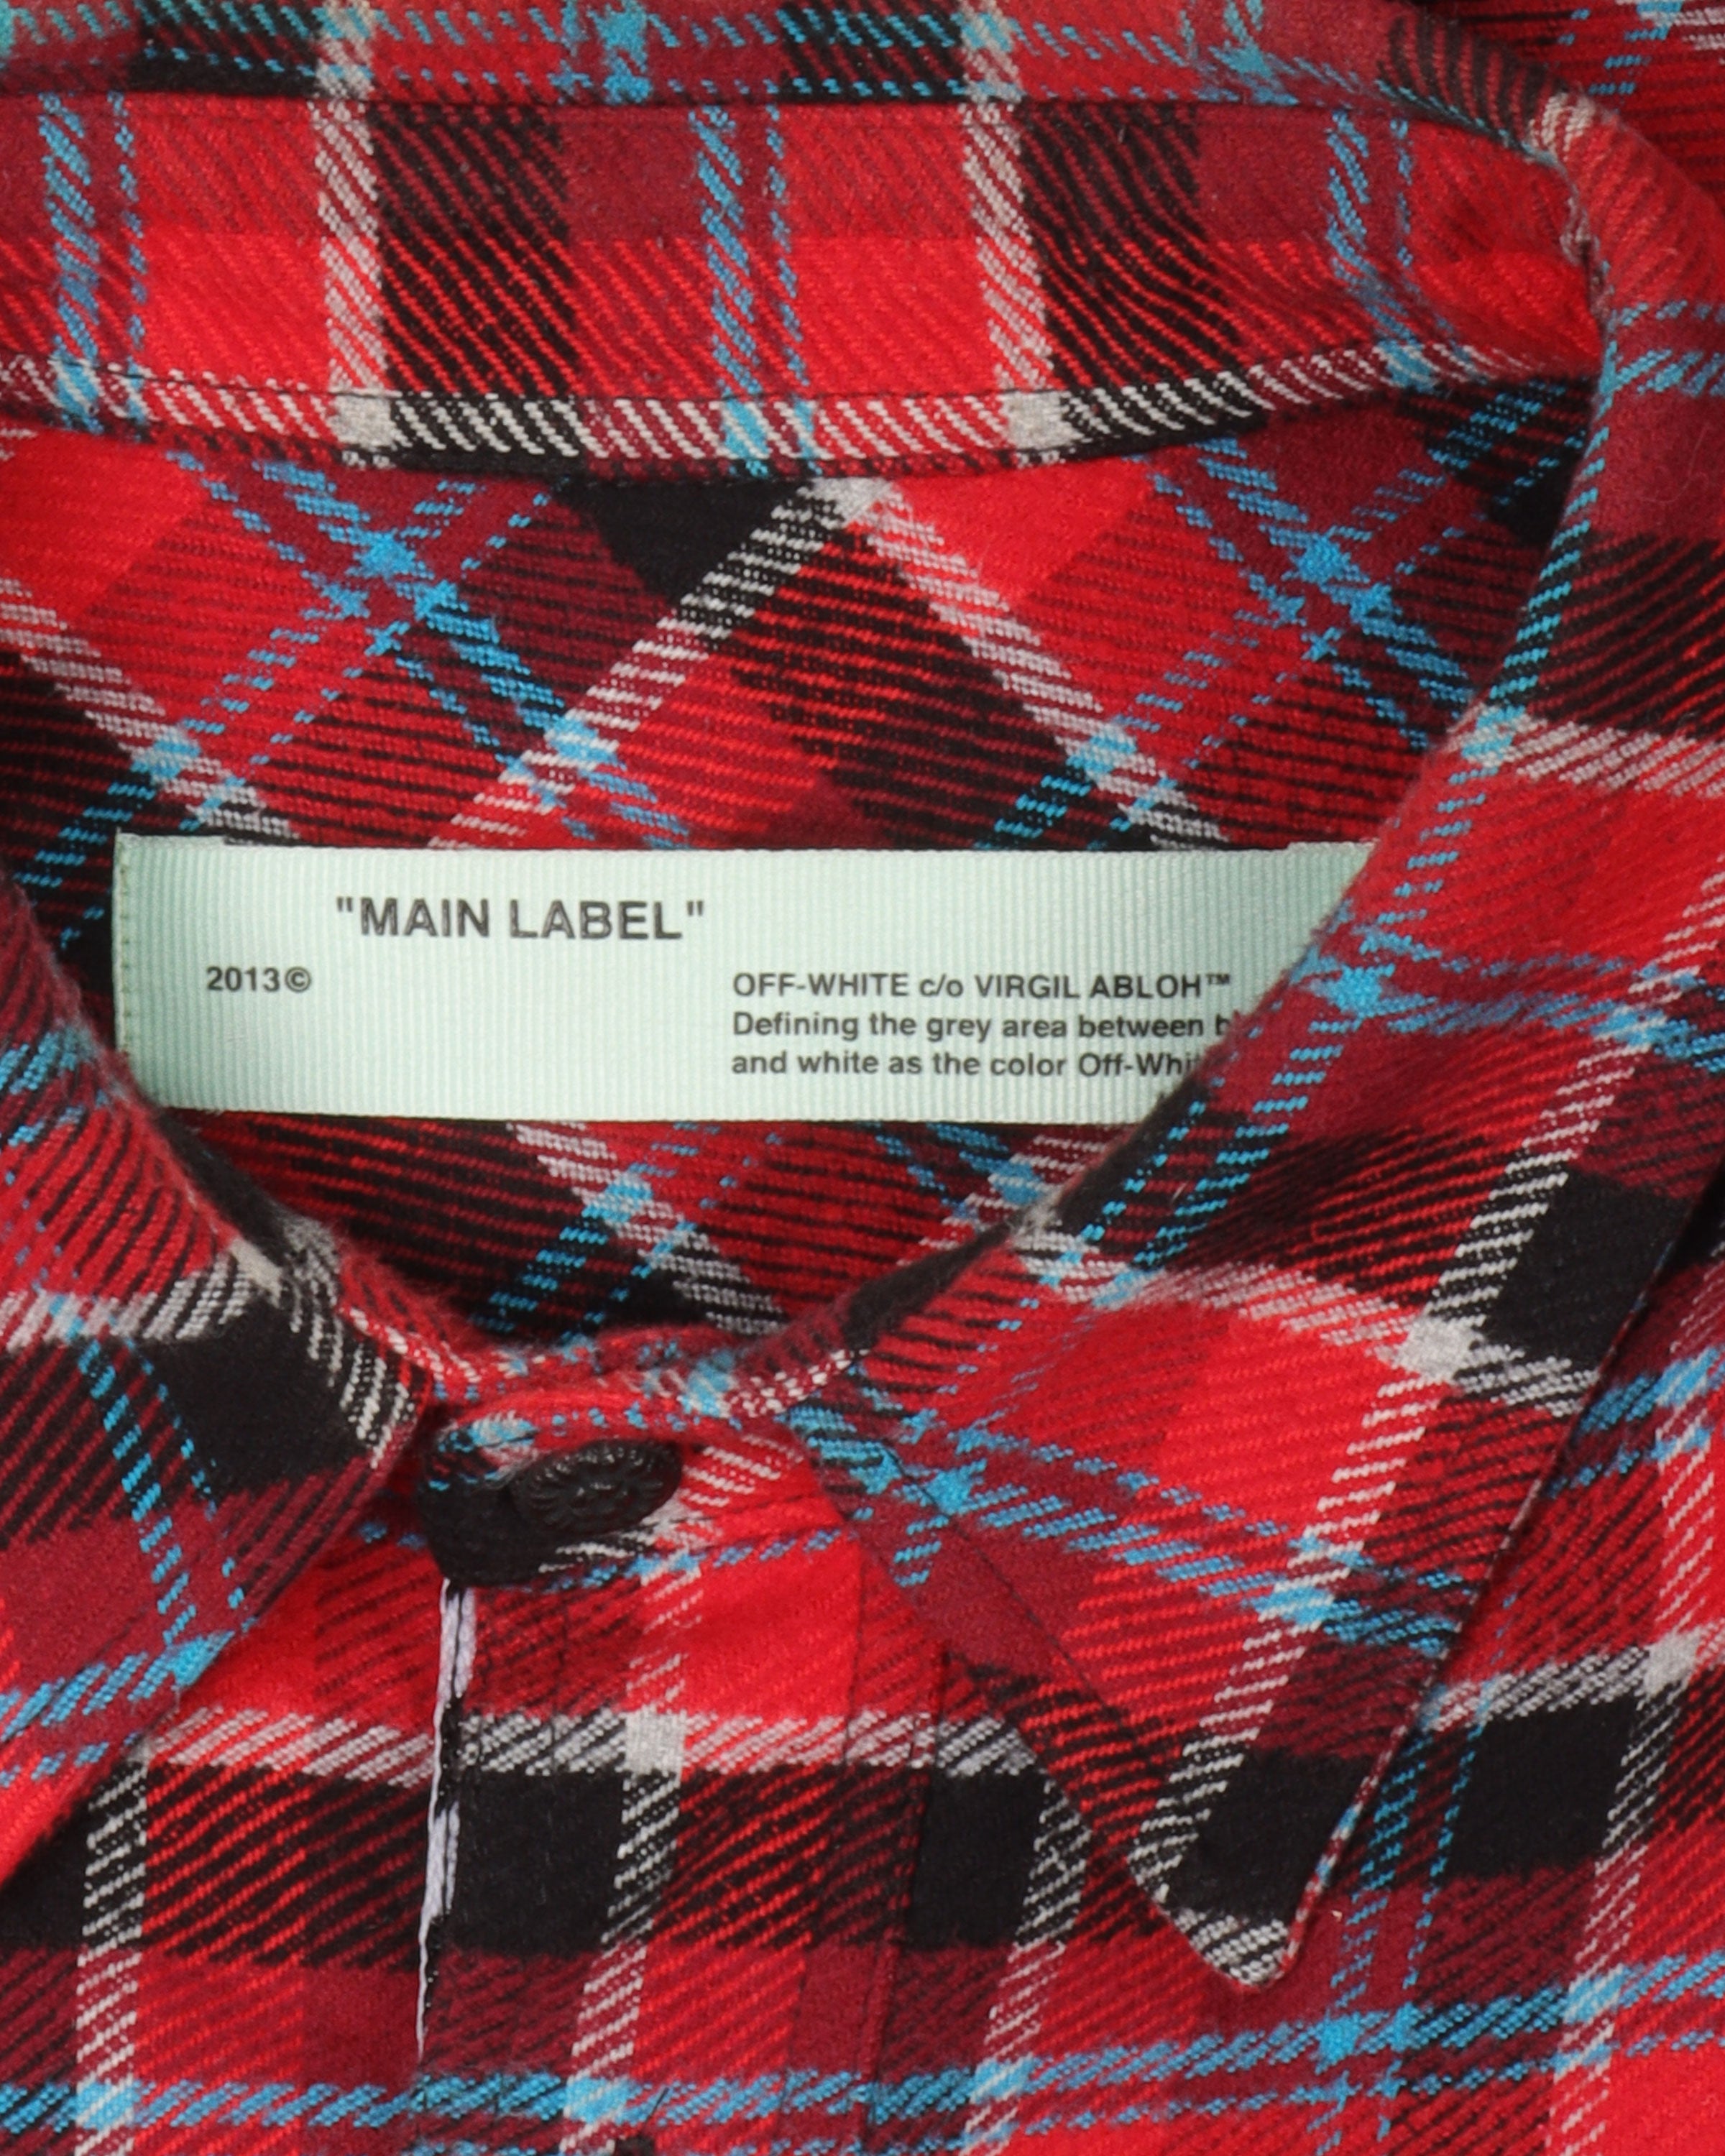 "Check Shirt" Flannel